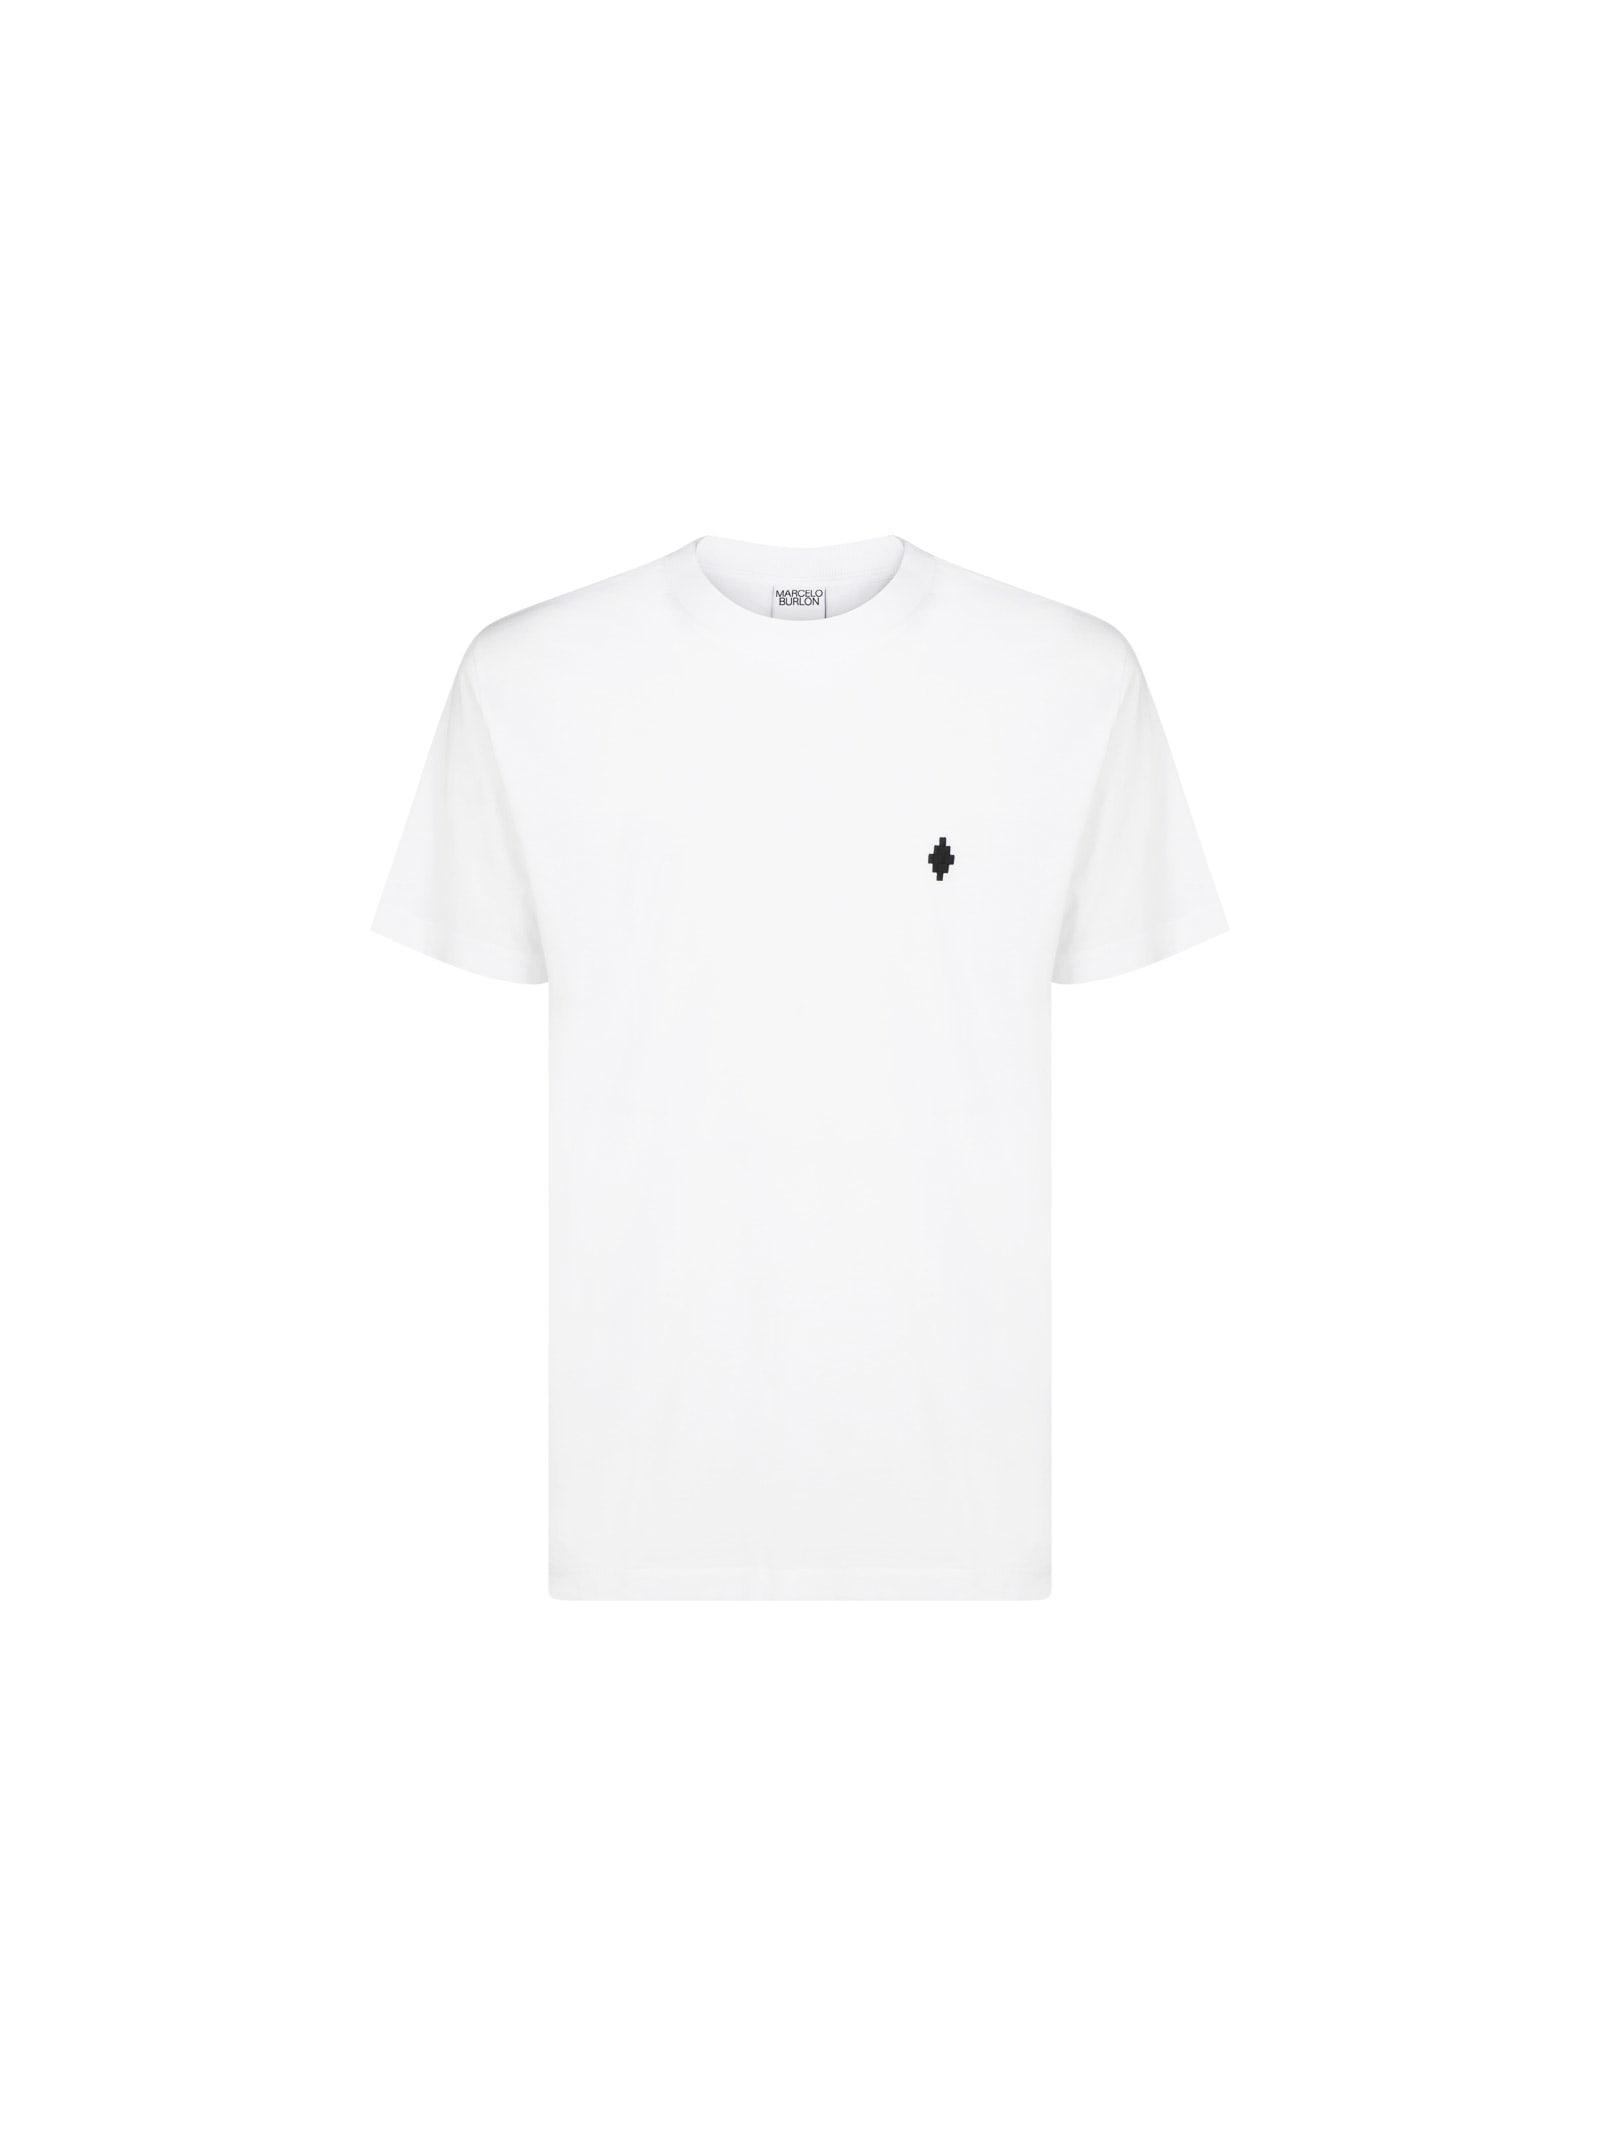 Marcelo Burlon Cotton T-shirt in White/Black (White) for Men - Save 10% |  Lyst